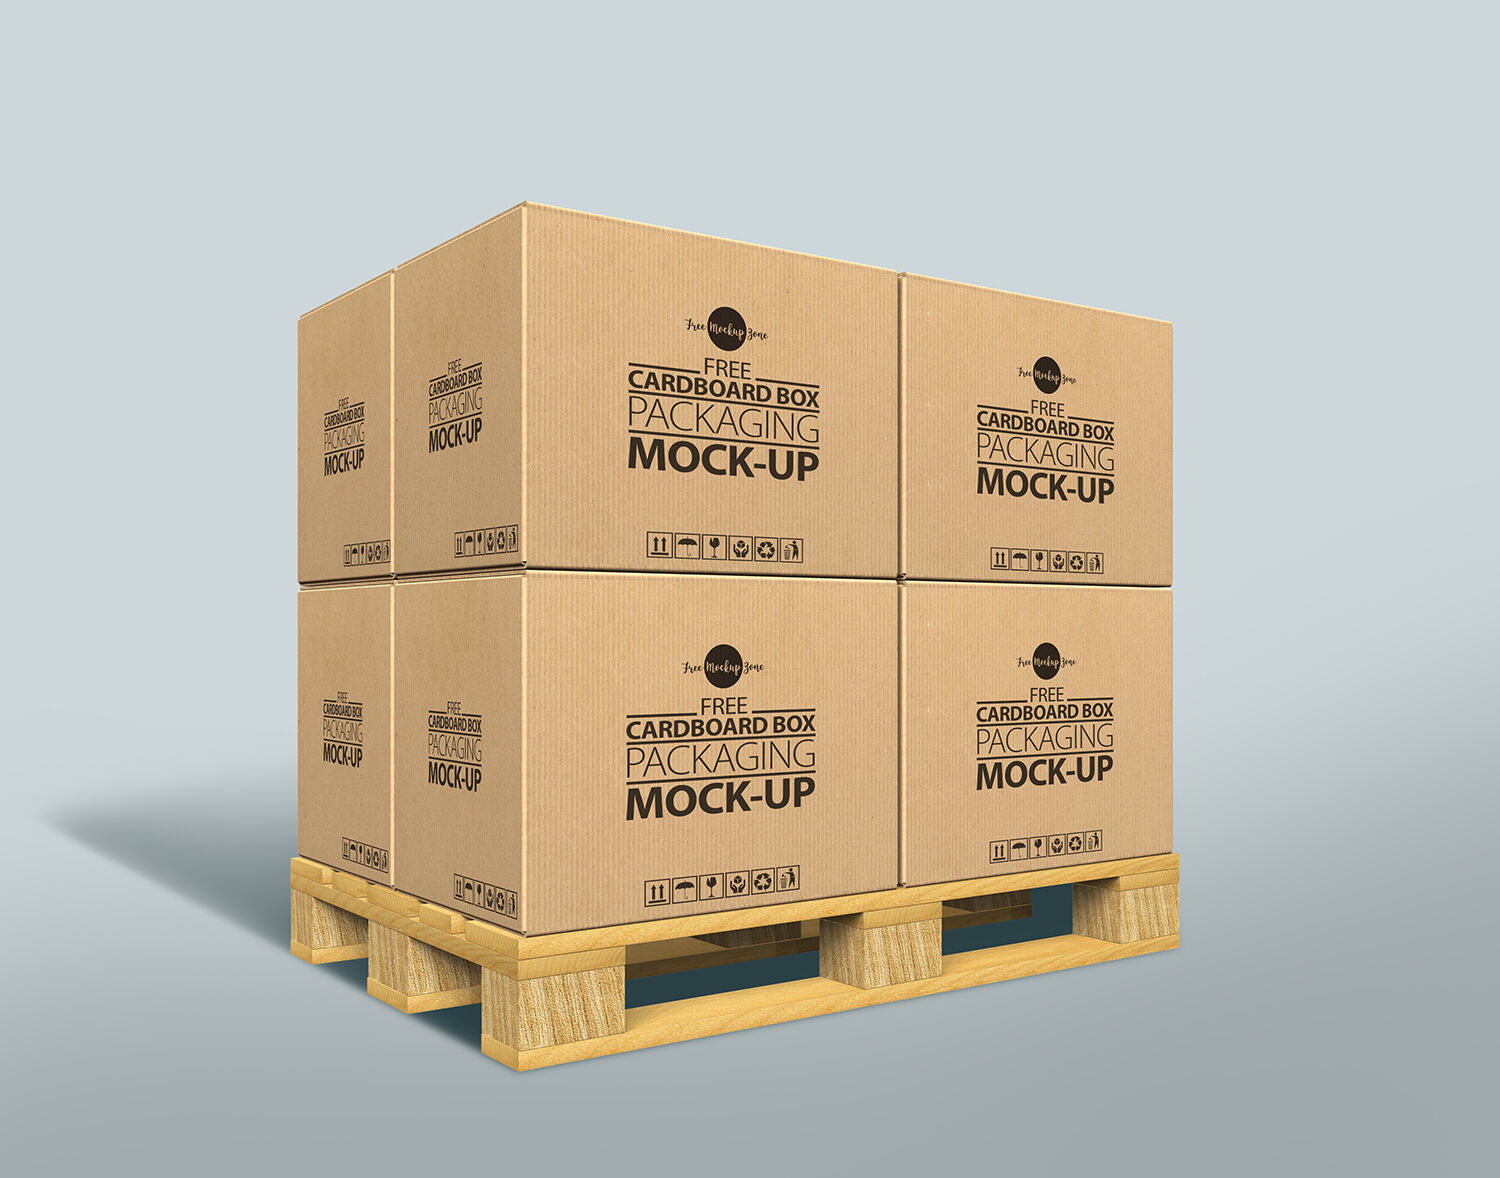 3/4 View of Cardboard Packaging Boxes Mockup (FREE) - Resource Boy